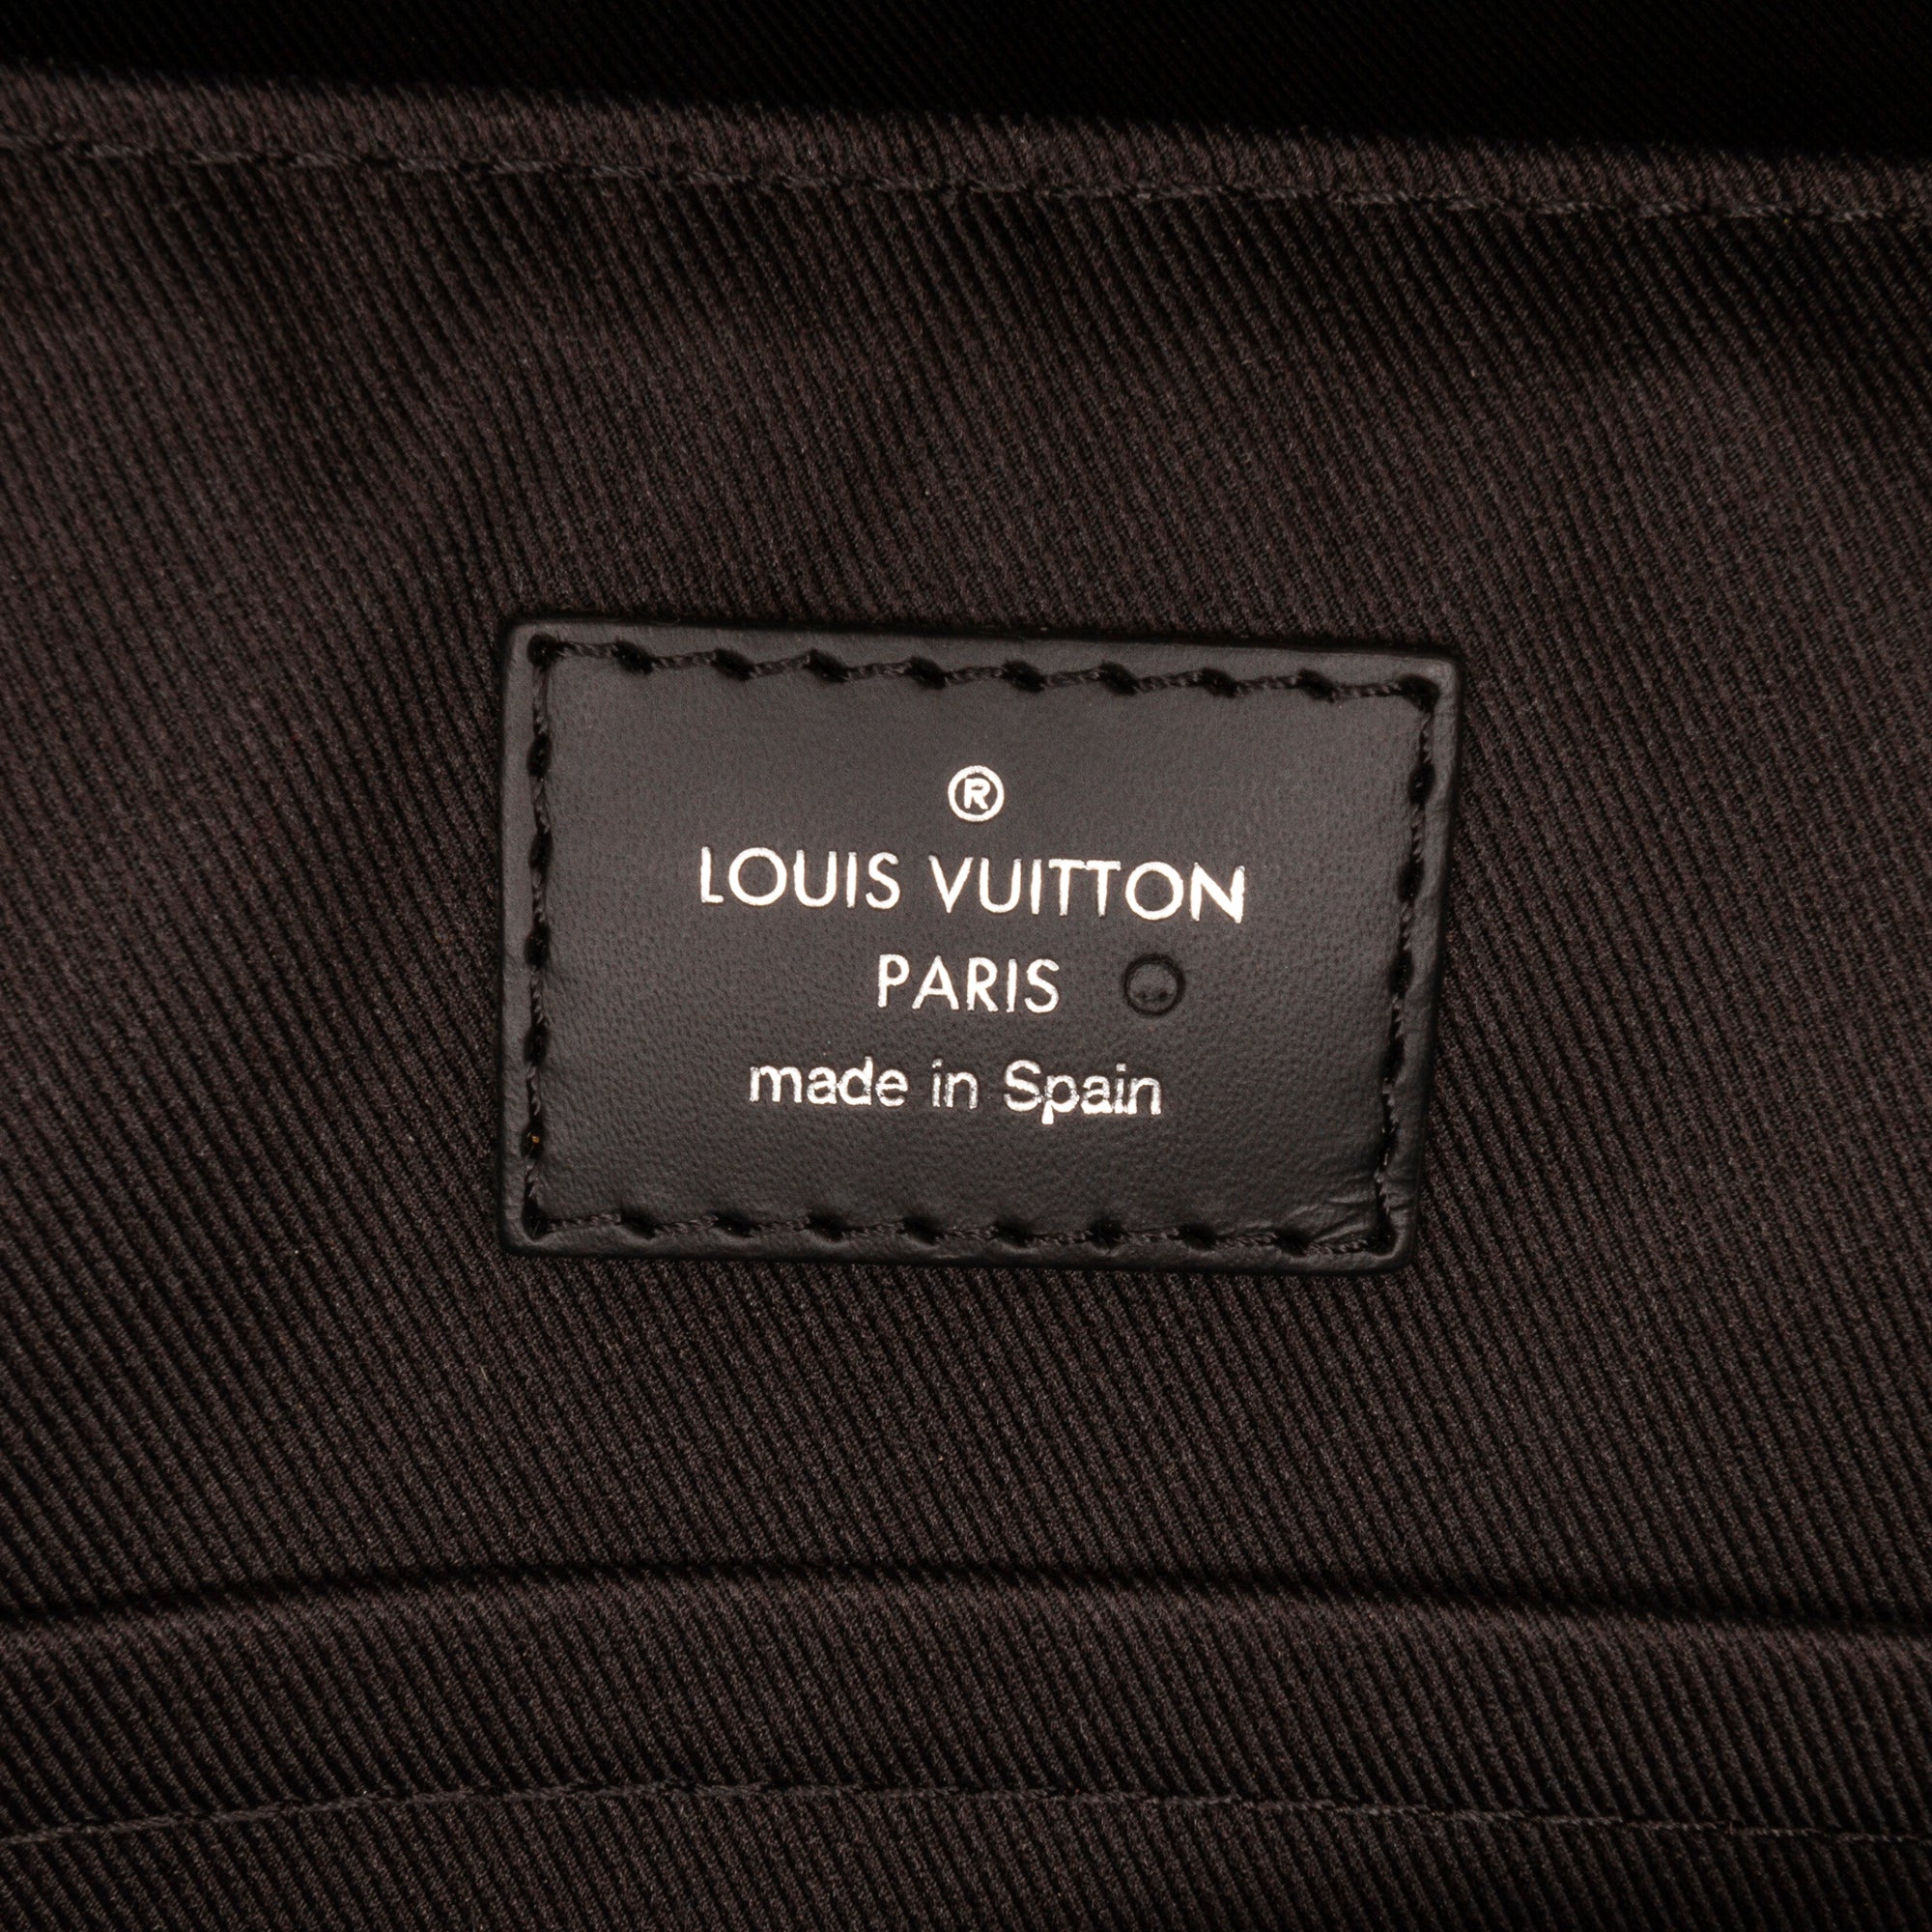 Super rare Louis Vuitton bag district Cobalt jungle in perfect